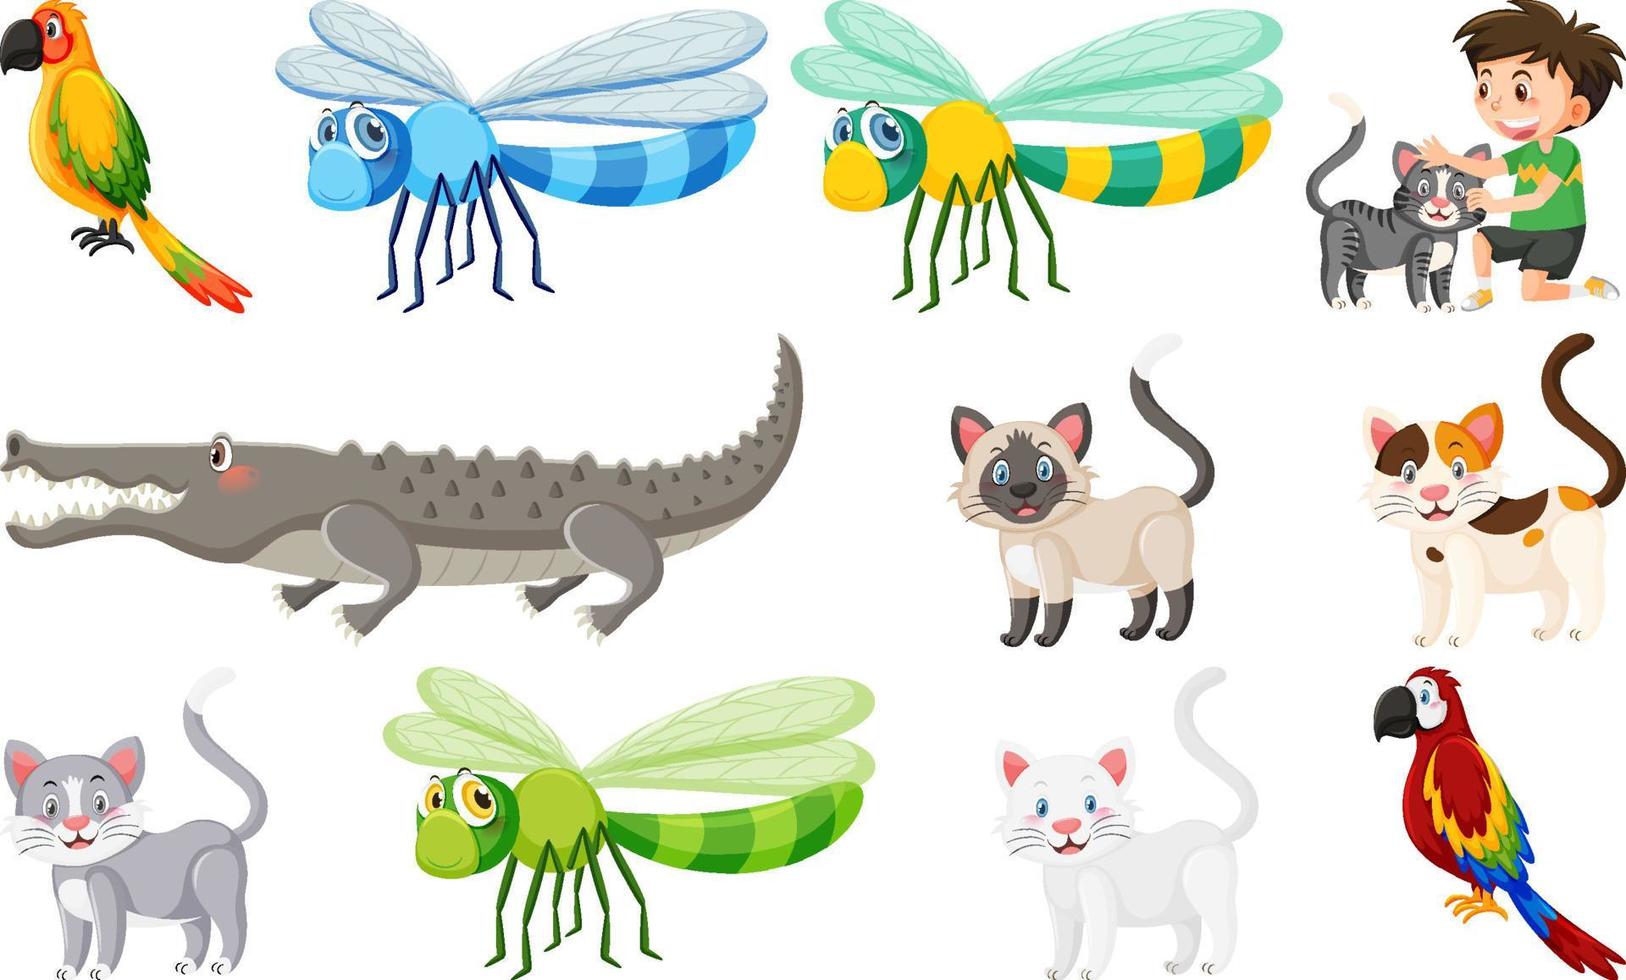 Set of various wild animals in cartoon style vector